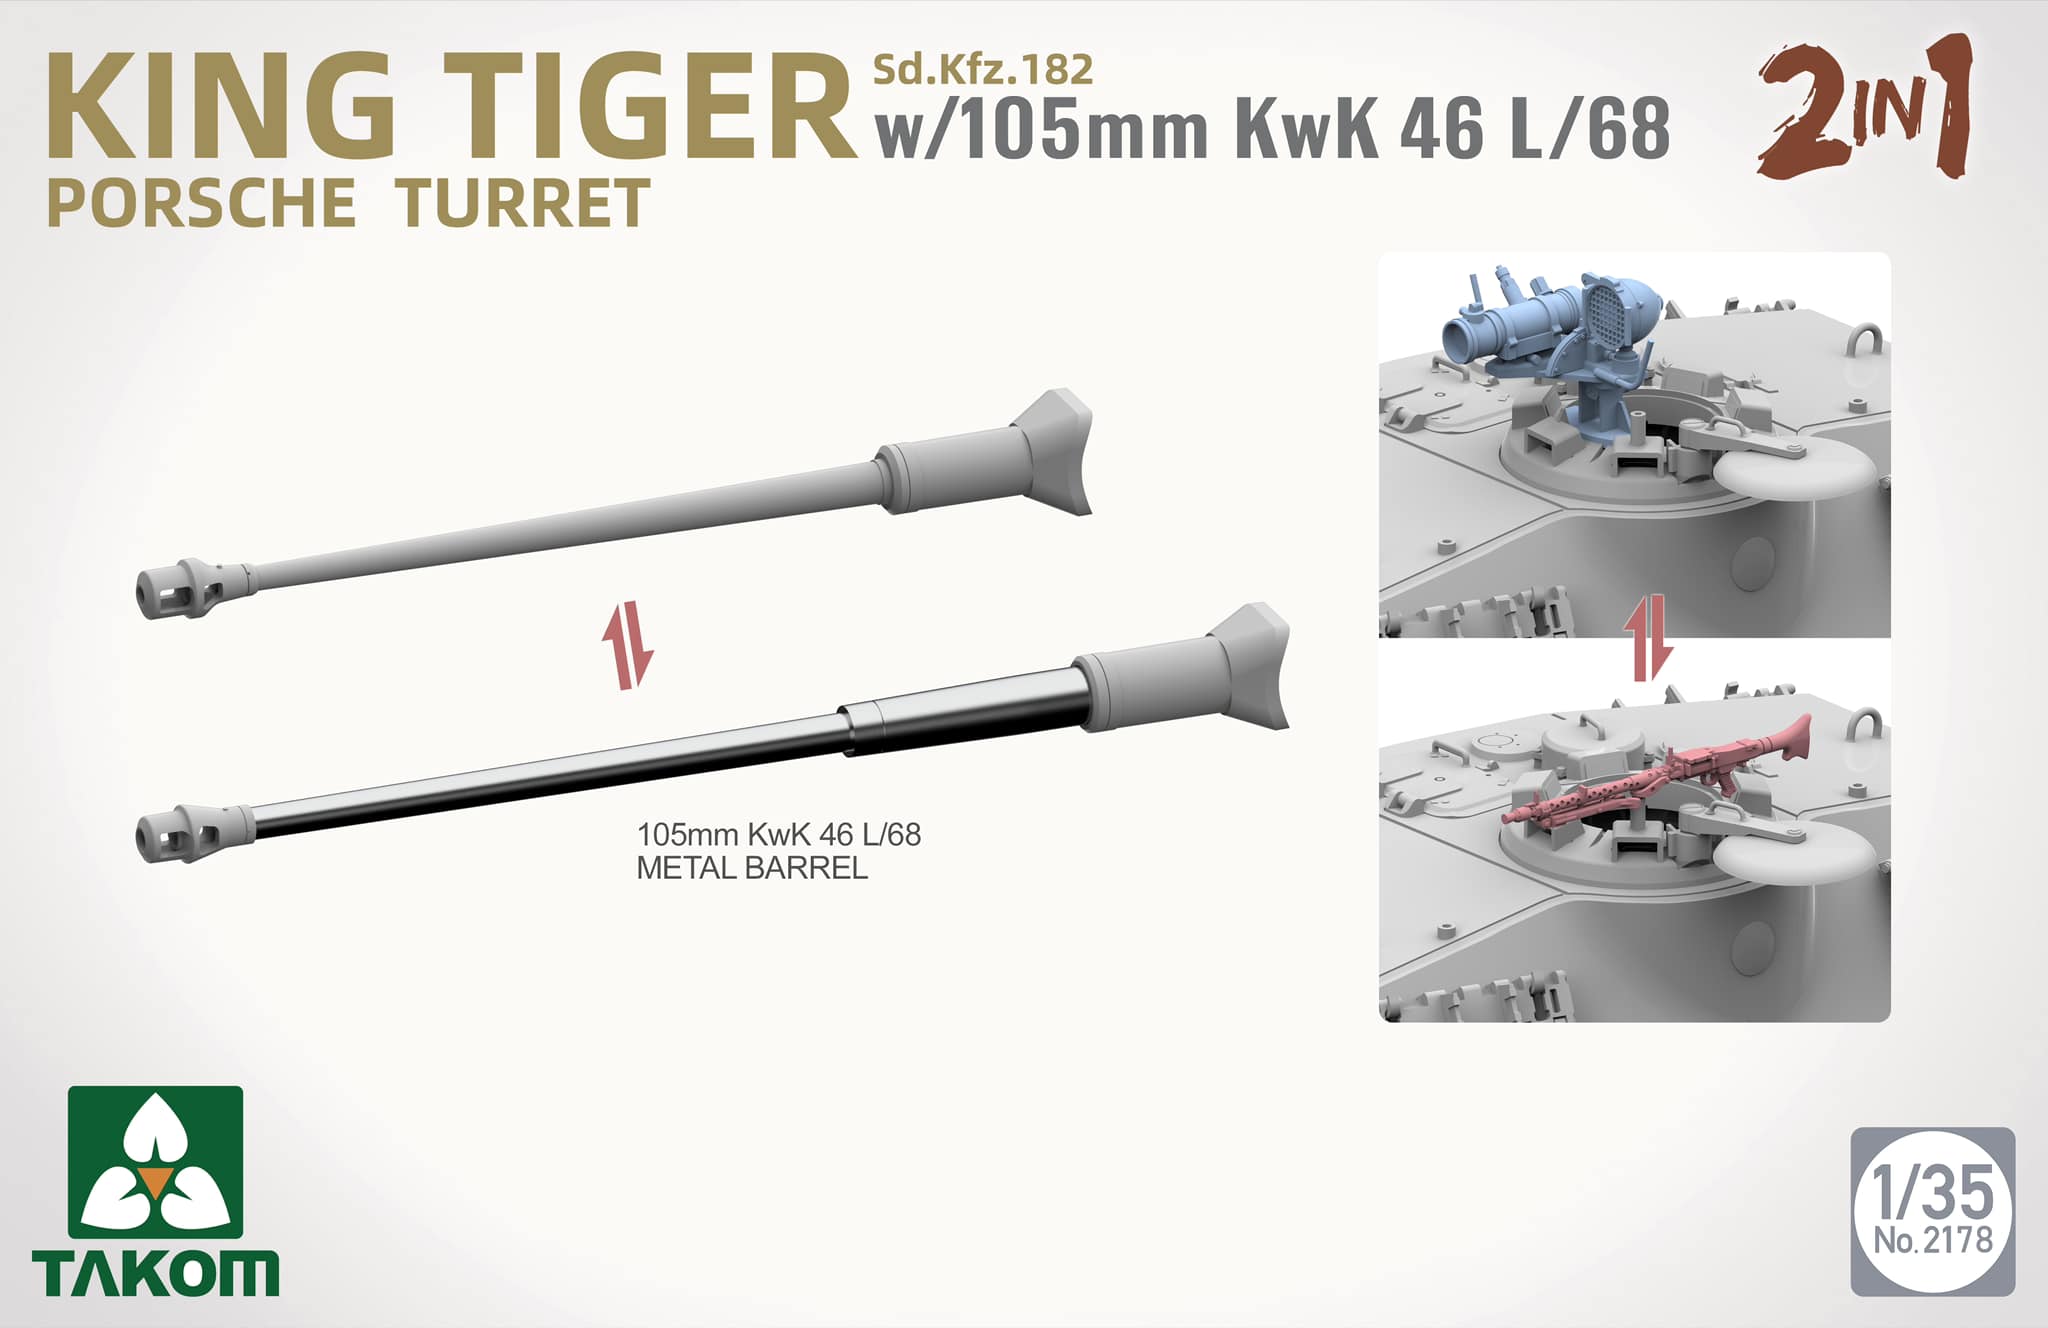 King Tiger w/105mm KwK 46L/68 - Porsche Turret - Sd.Kfz.182 - 2 in 1